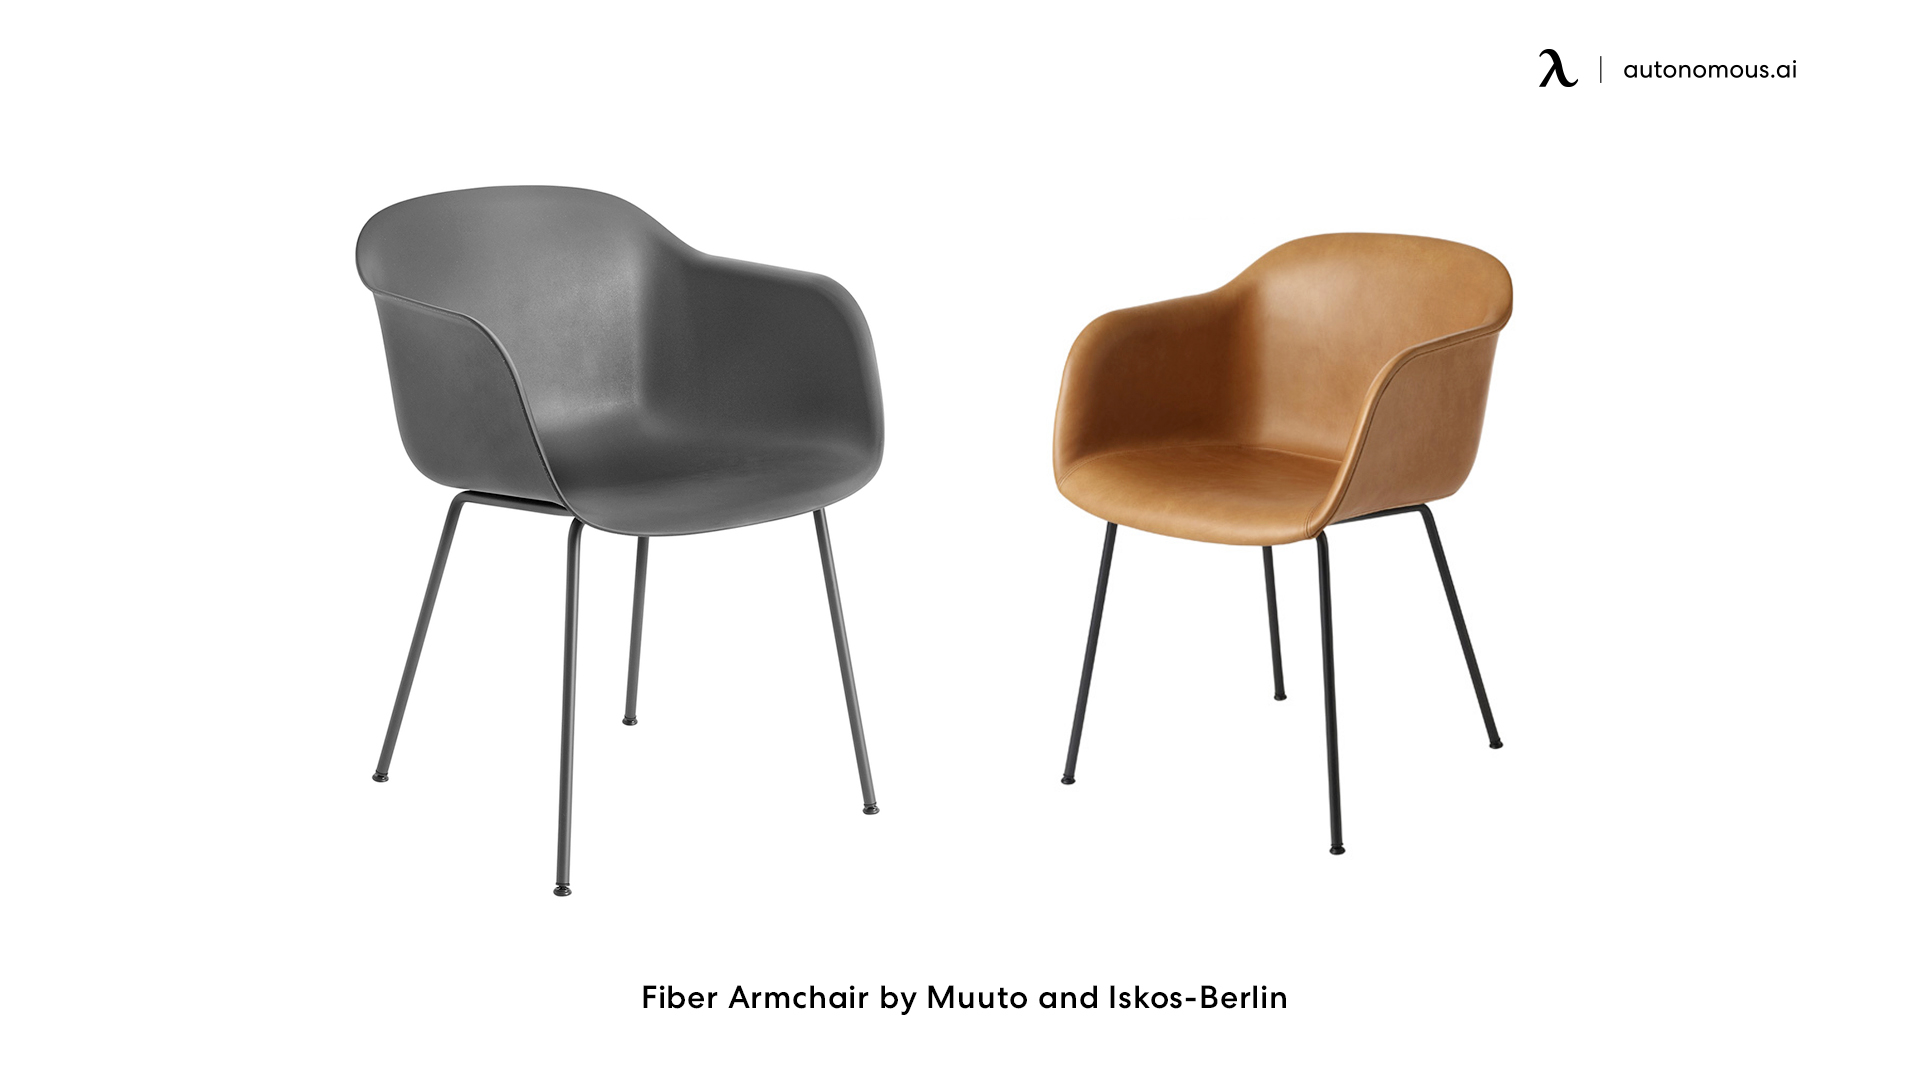 Fiber Armchair by Muuto and Iskos-Berlin